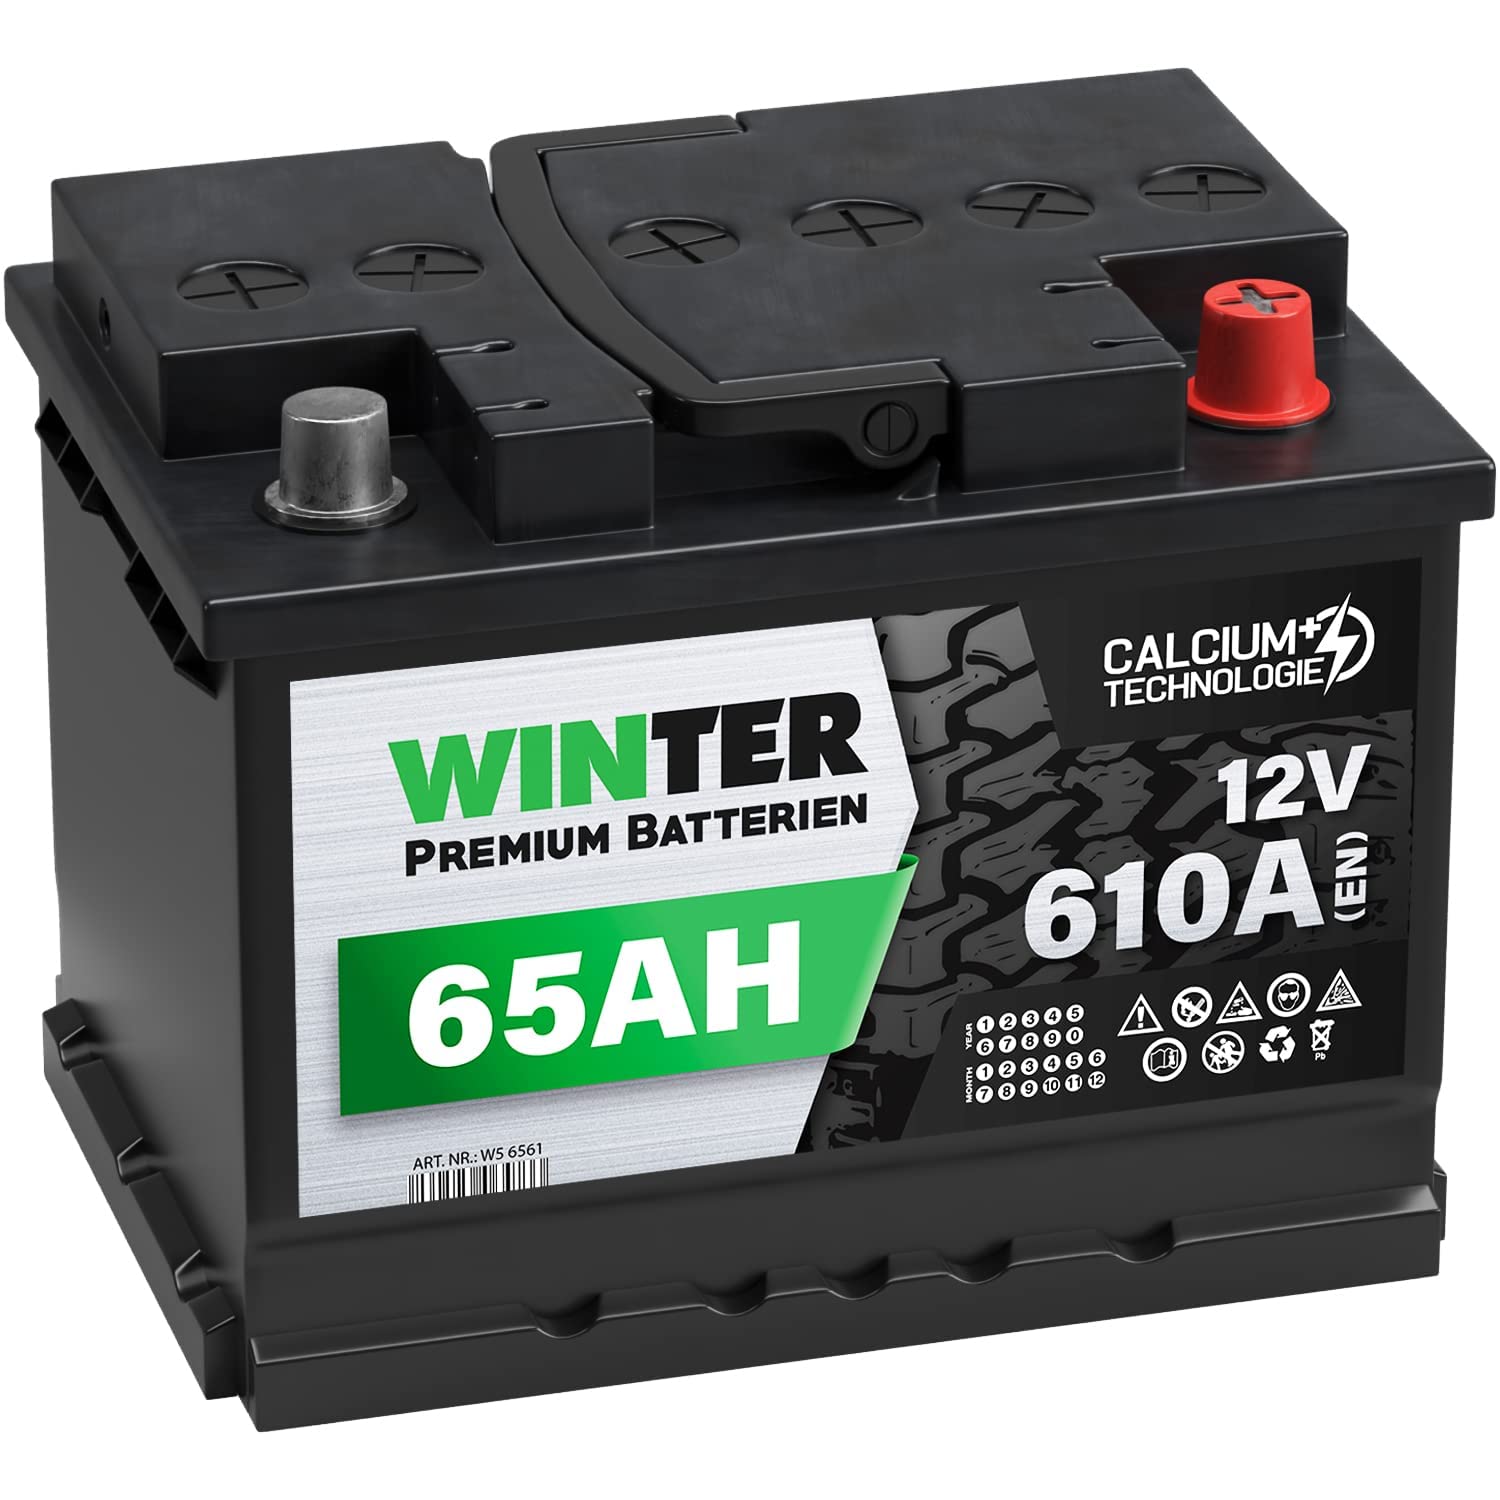 WINTER Premium Autobatterie 12V 65Ah 610A/EN statt 60Ah 61Ah 62Ah 63Ah 64Ah von WINTER PREMIUM BATTERIEN